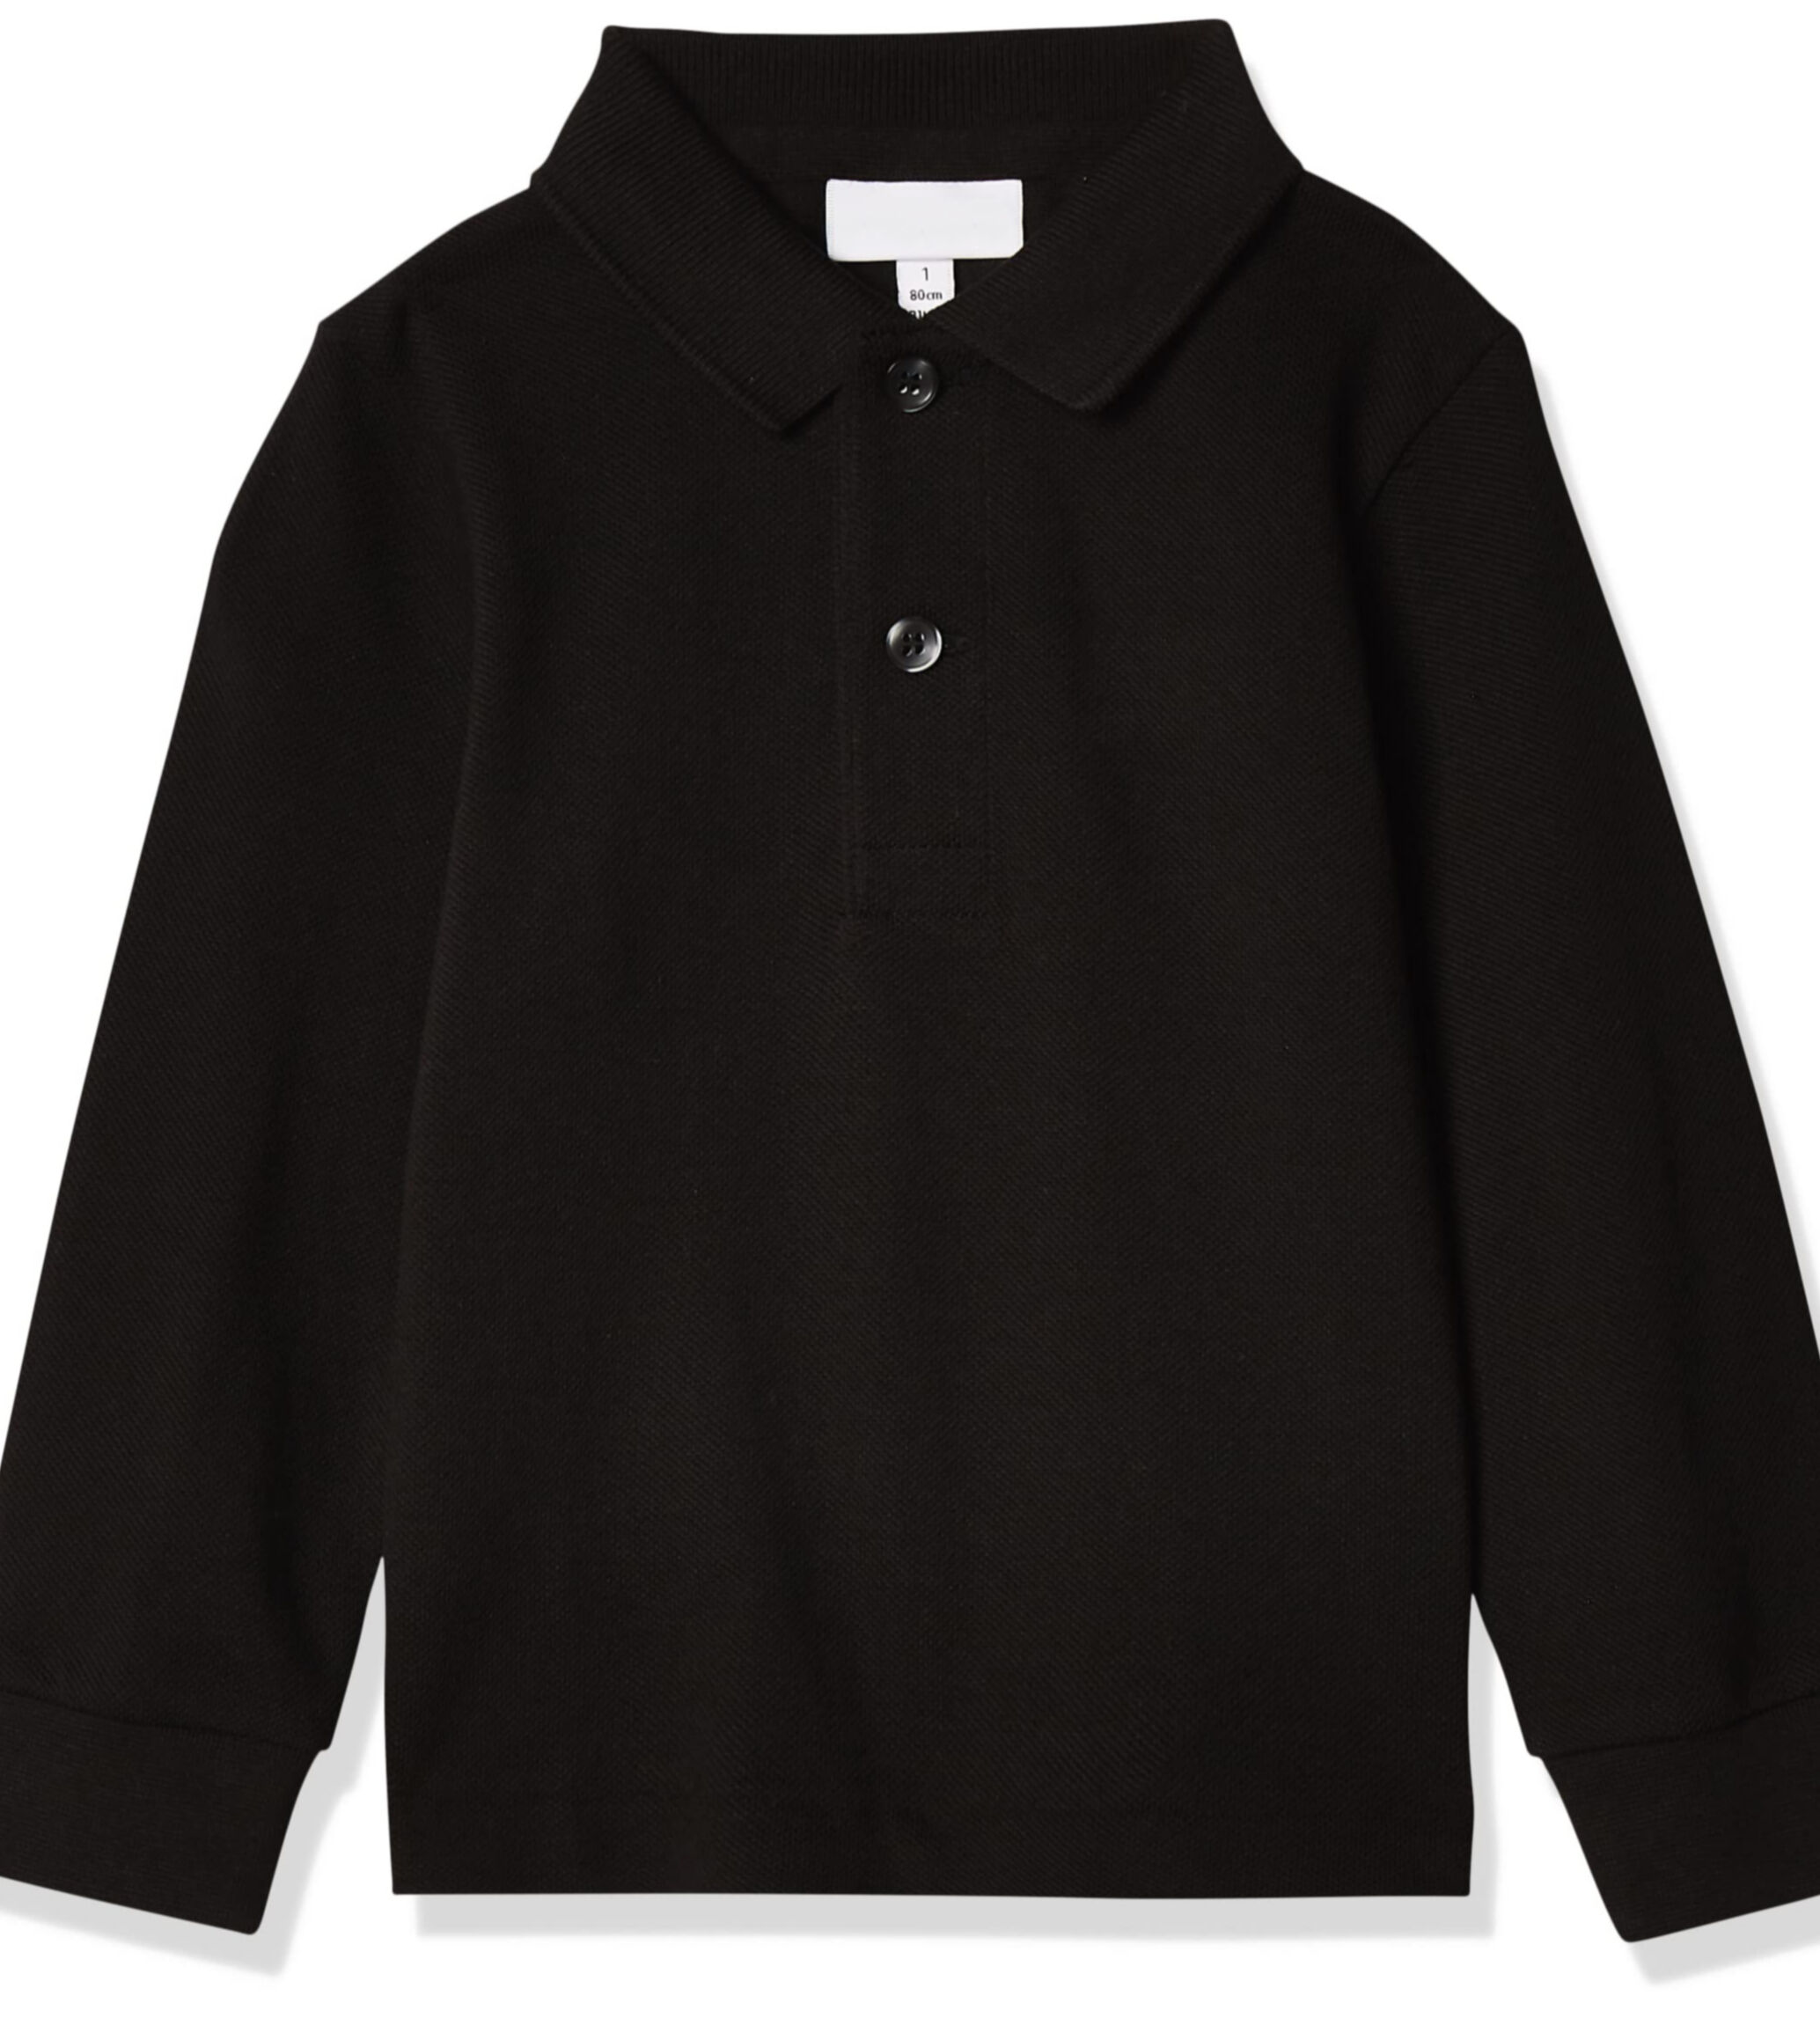 Wholesale Adult Size long Sleeve Pique Polo Shirt School Uniform in Heather  Grey. High School Uniform